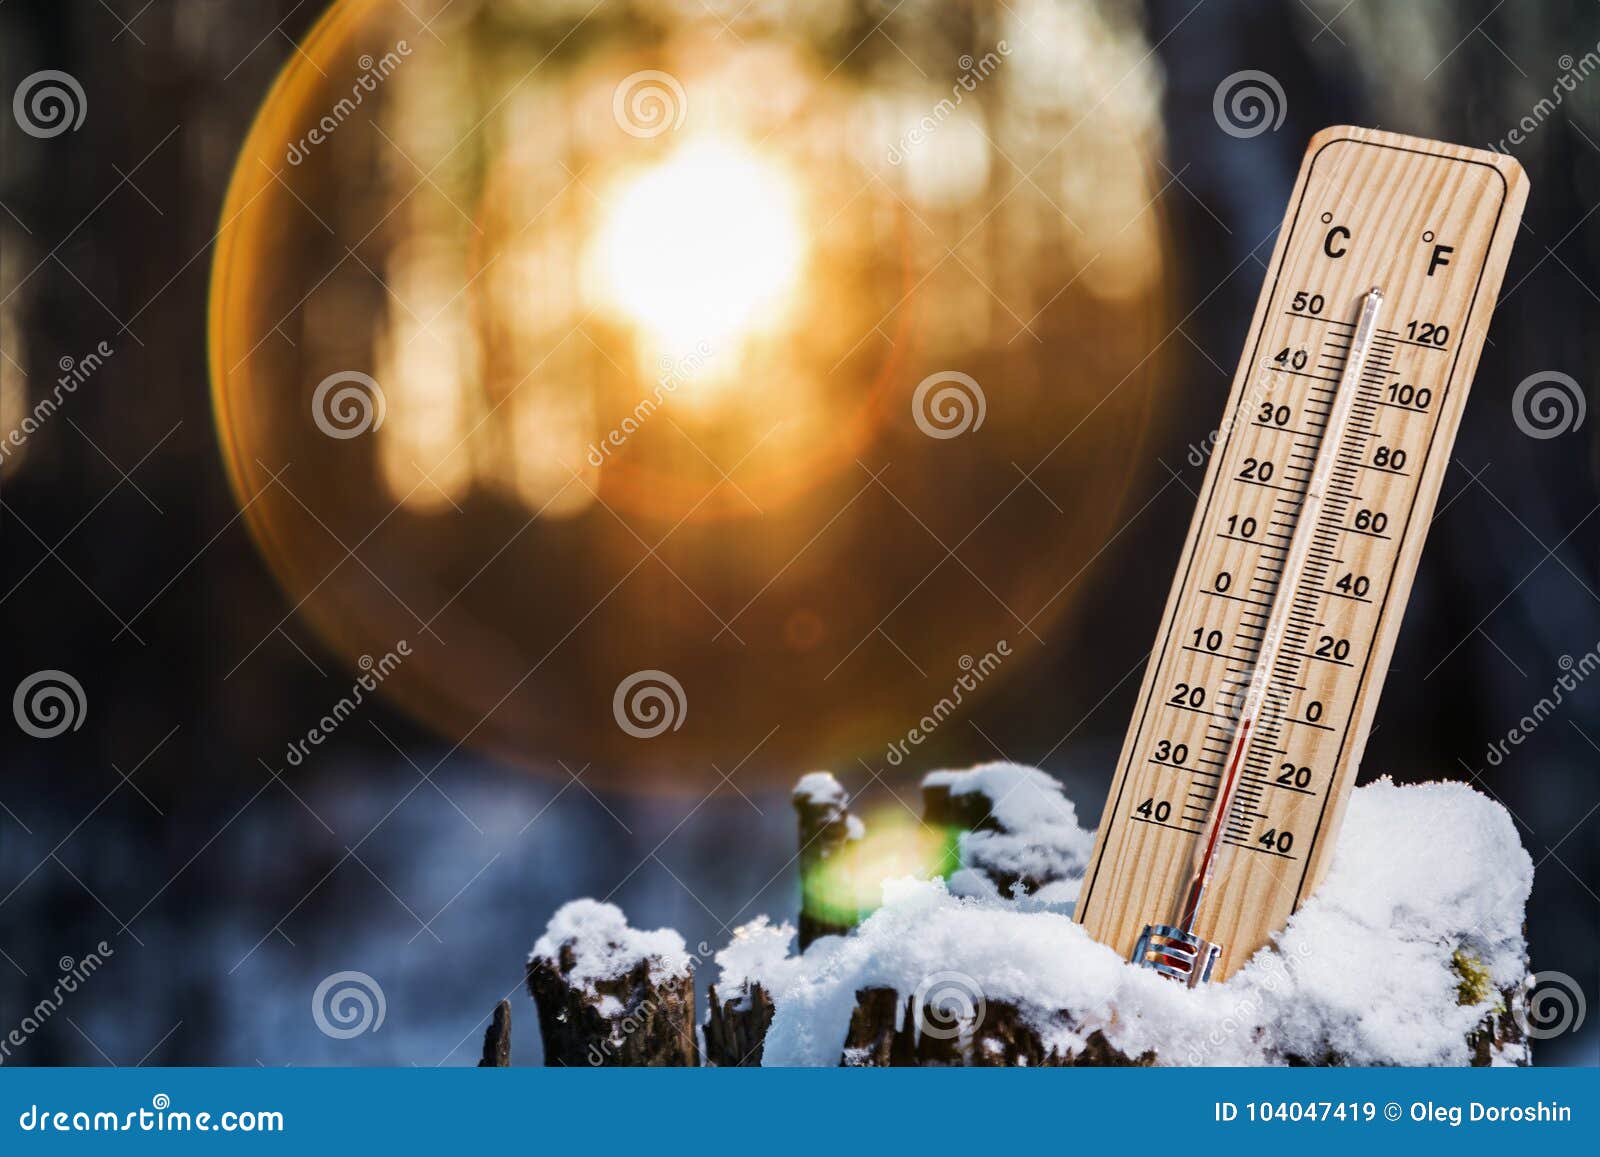 thermometer with sub-zero temperatures